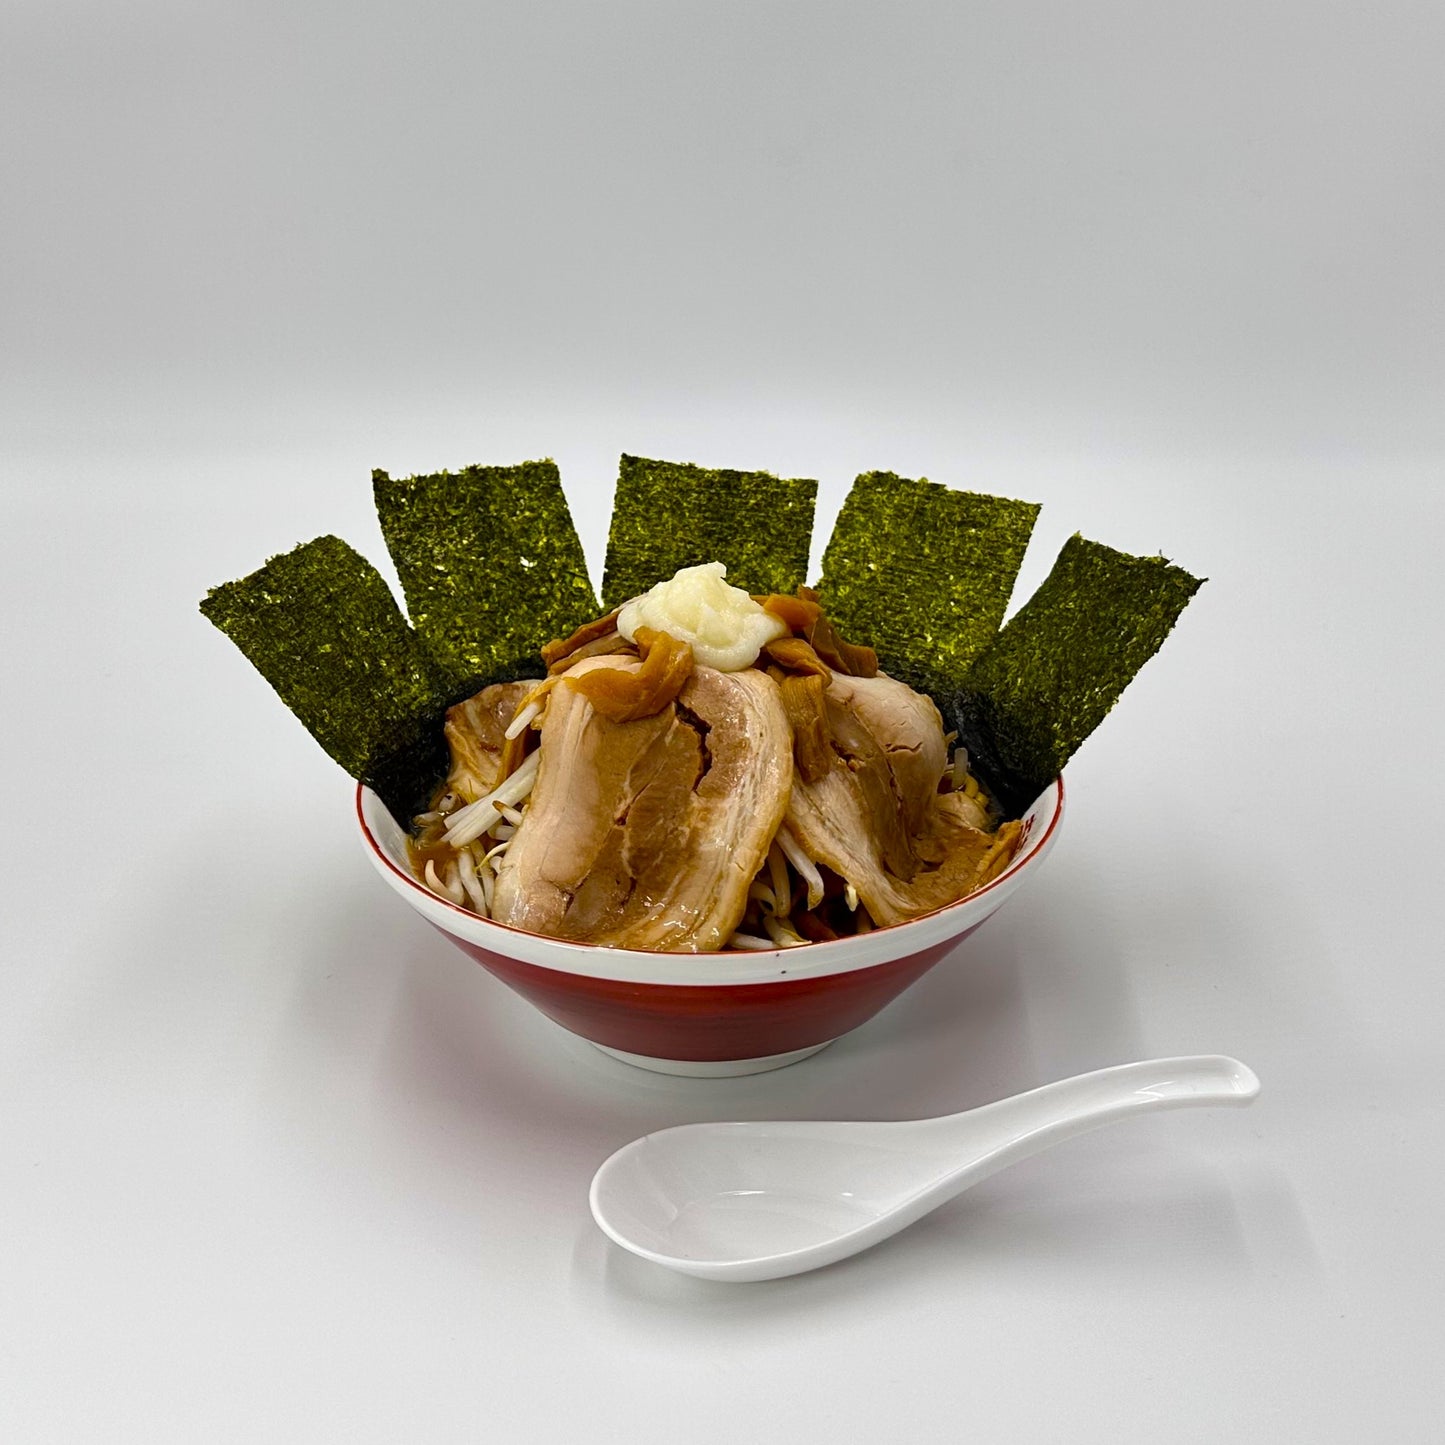 Maruchan　Se-abura (pork back fat) Instant Ramen Noodles 【3 popular ramen flavors】